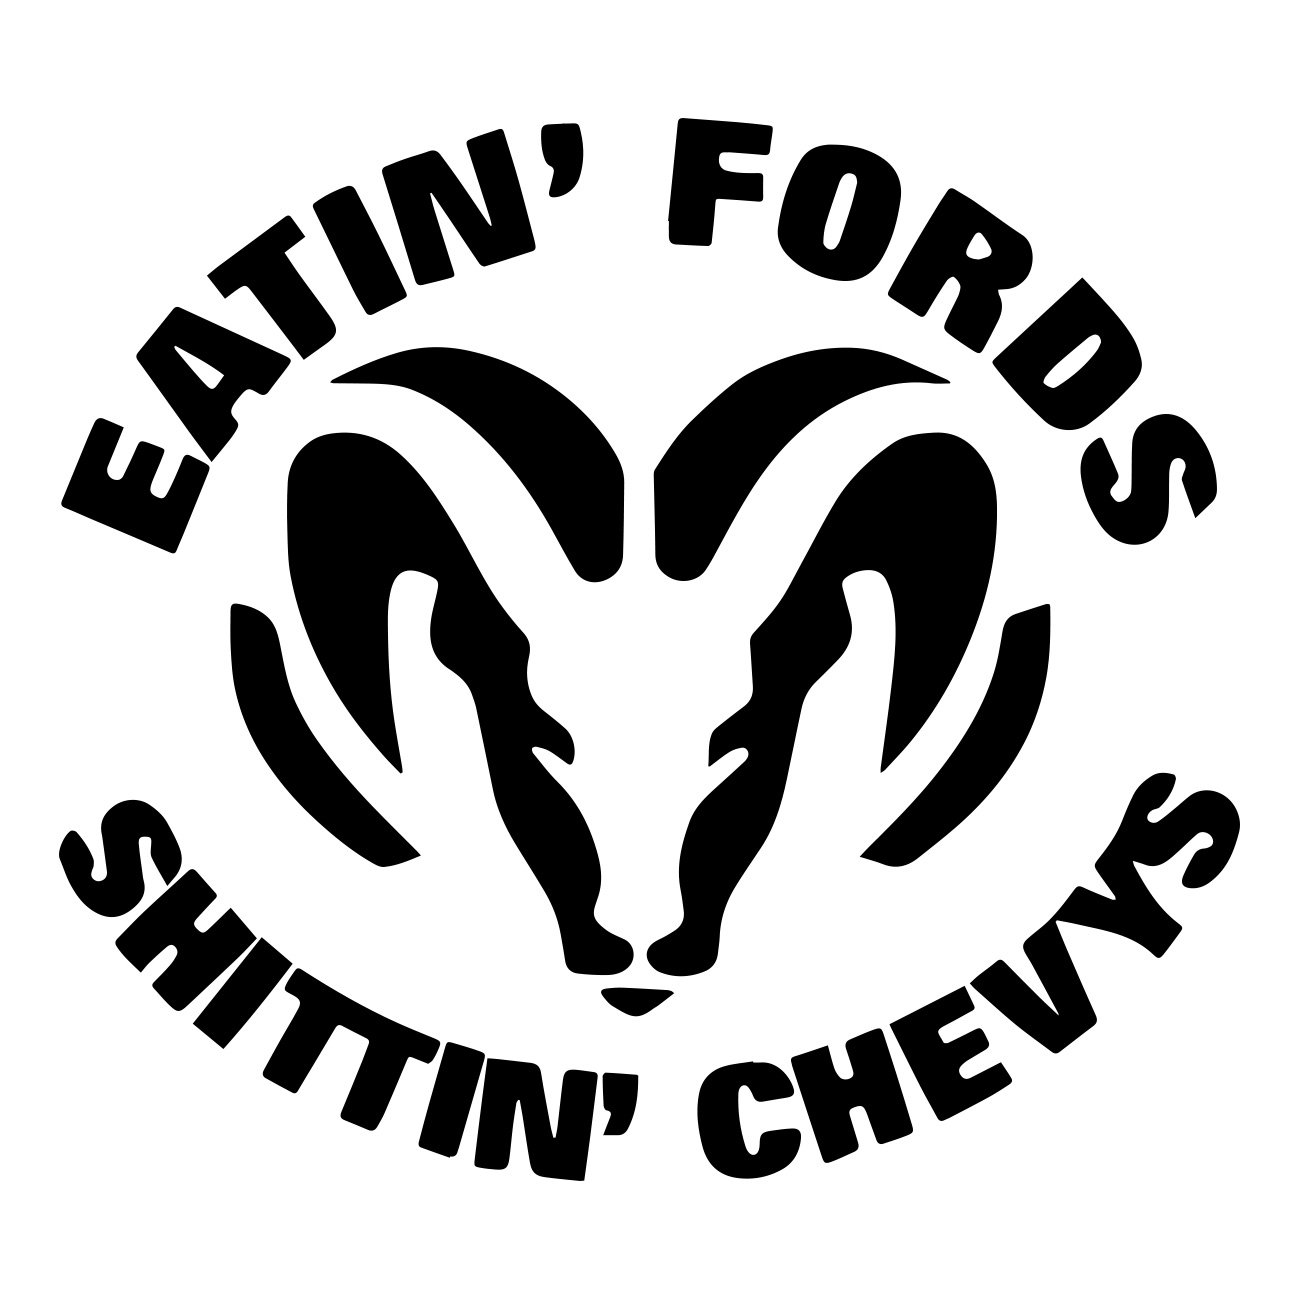 dodge rem eating fords shittin chevys